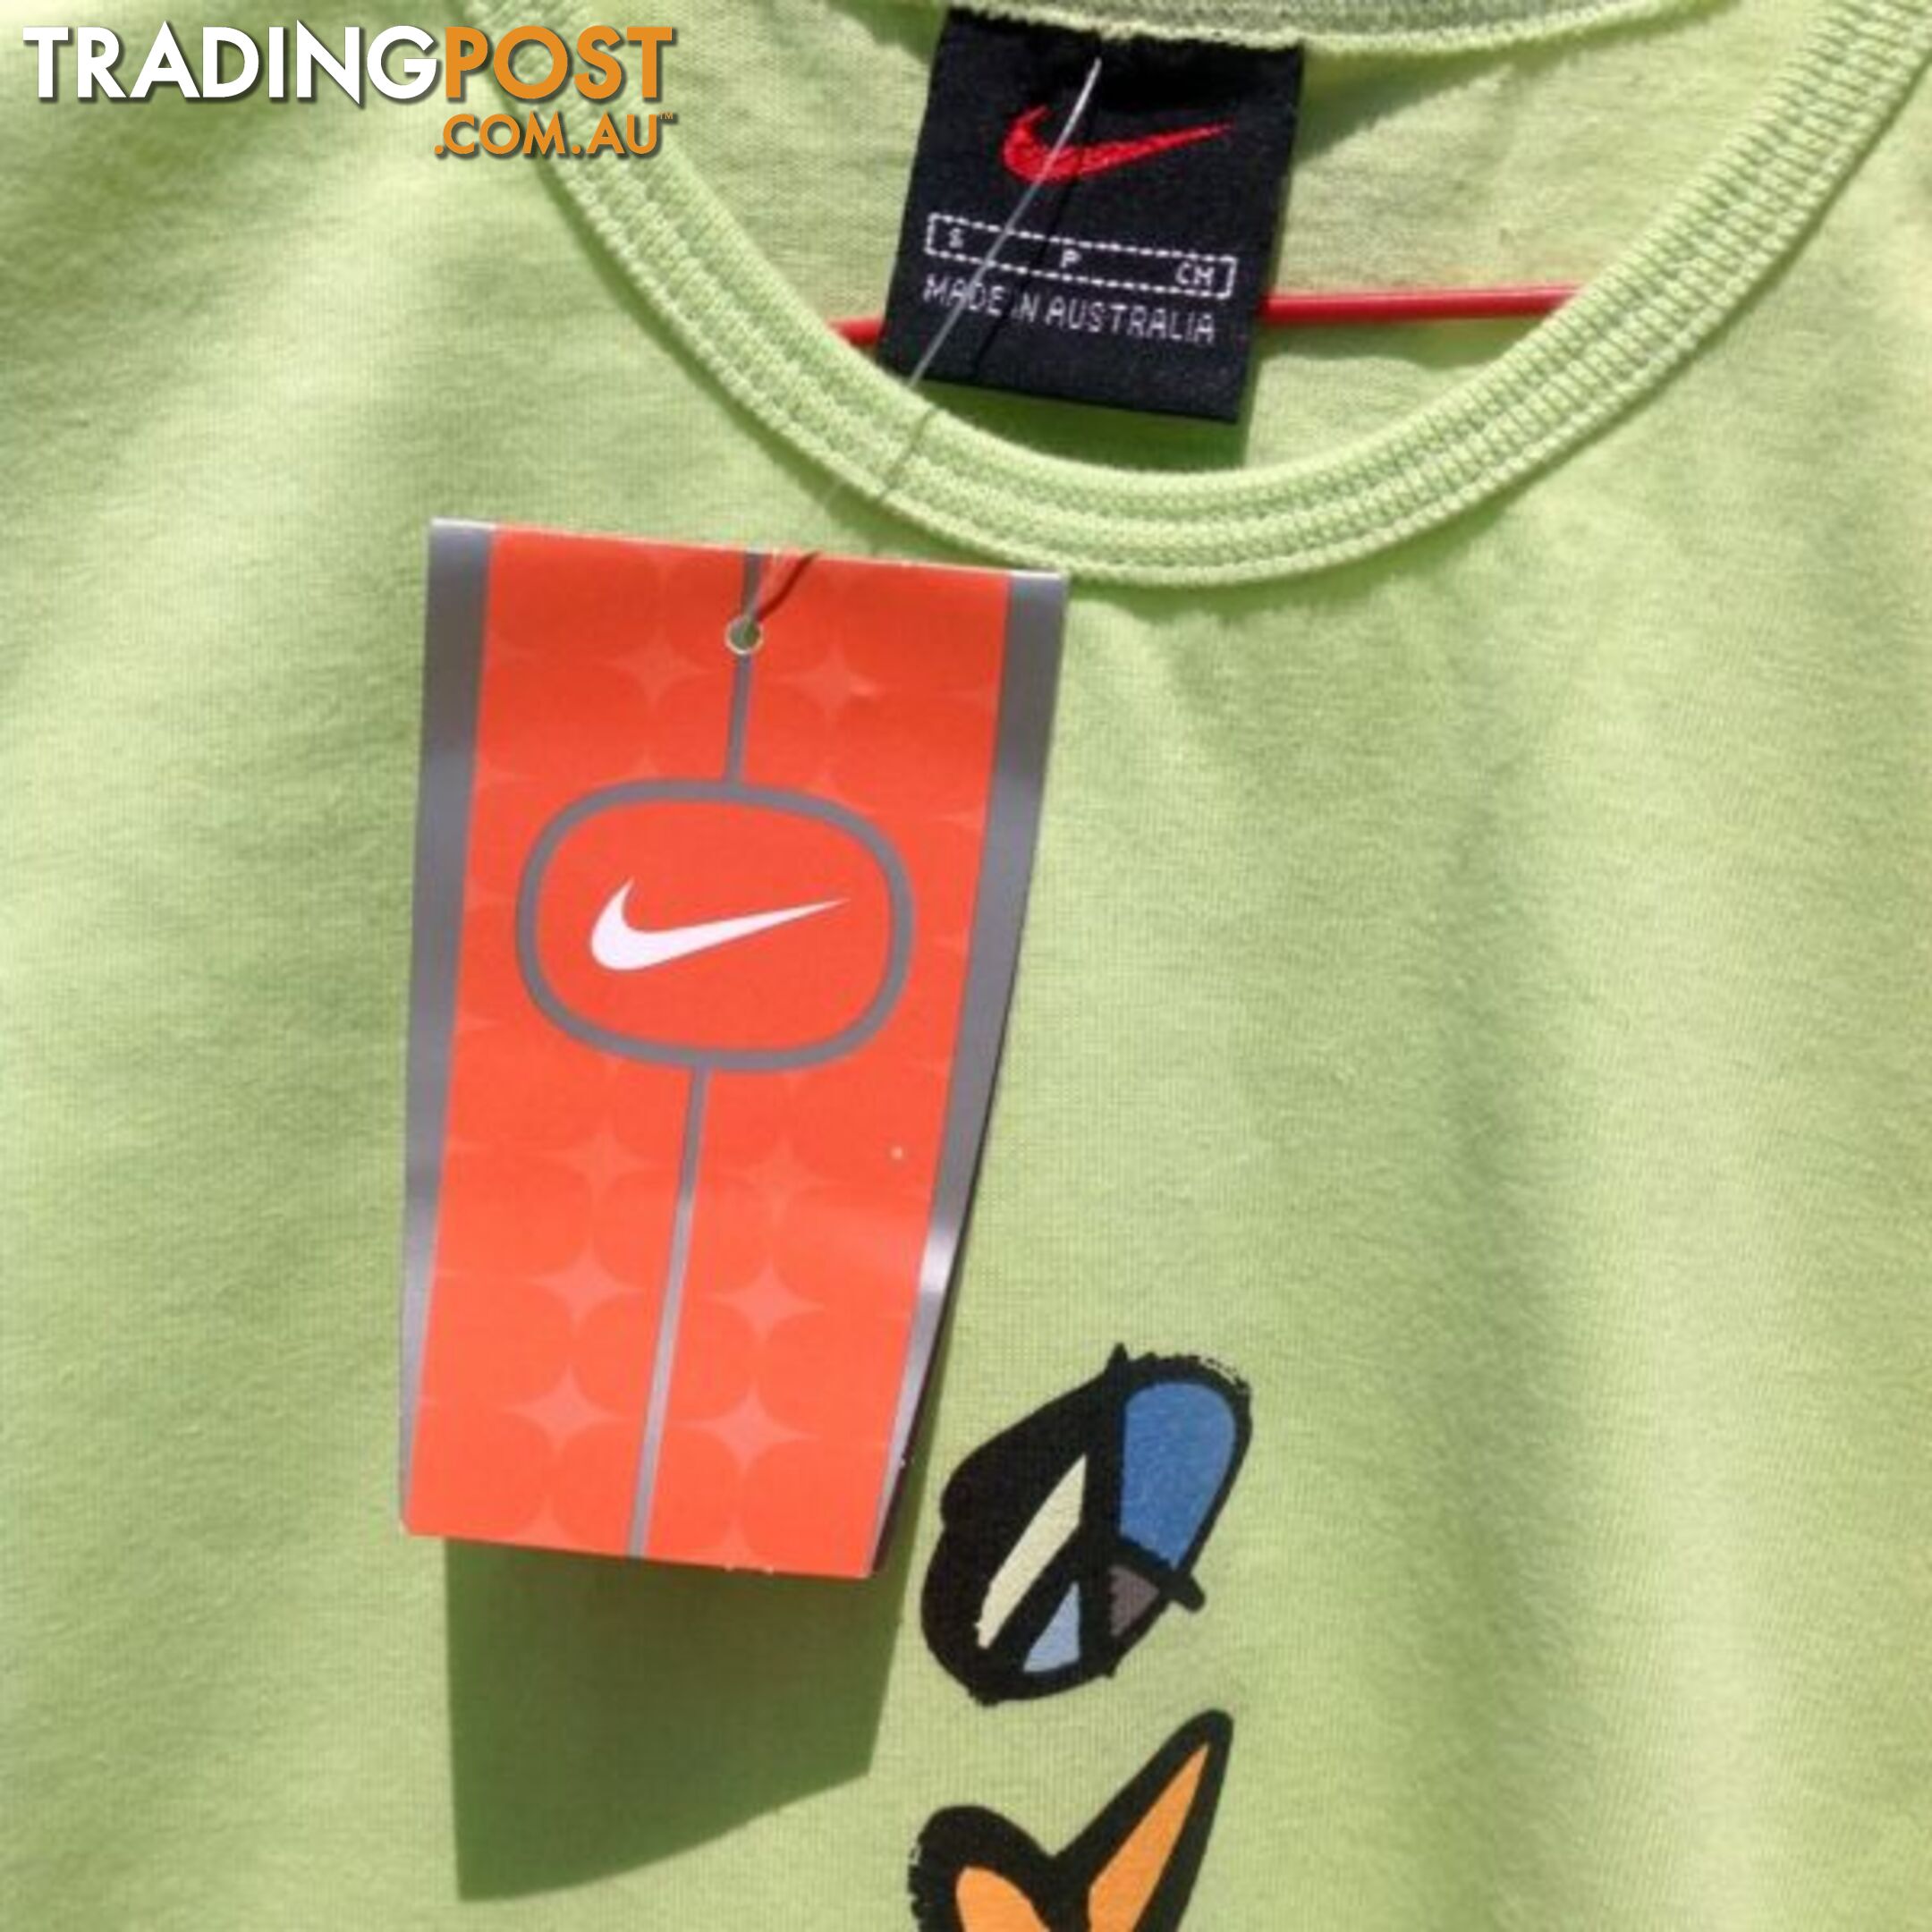 New " Nike " Girl's Tee Shirt